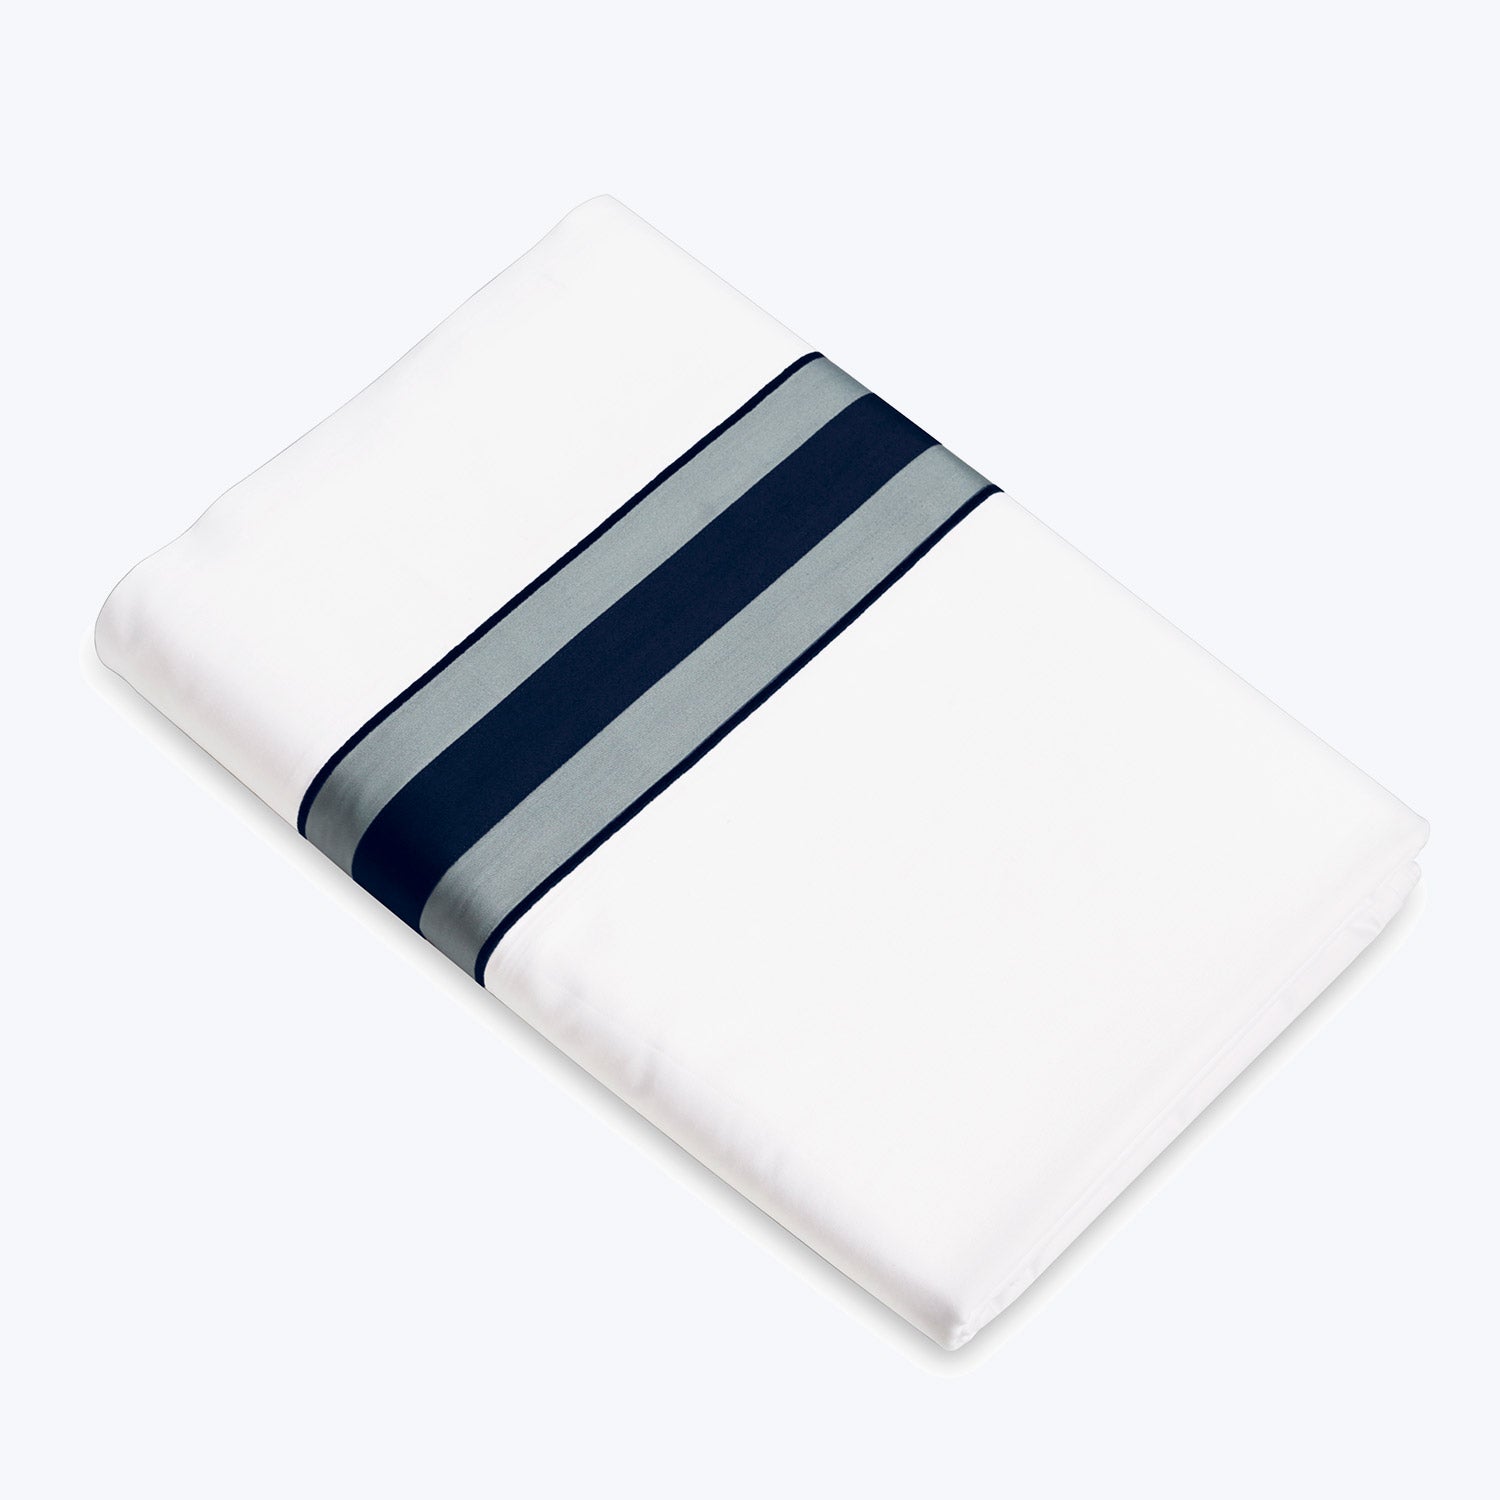 Dimora Sheets & Pillowcases, White/Midnight Blue Flat Sheet / King